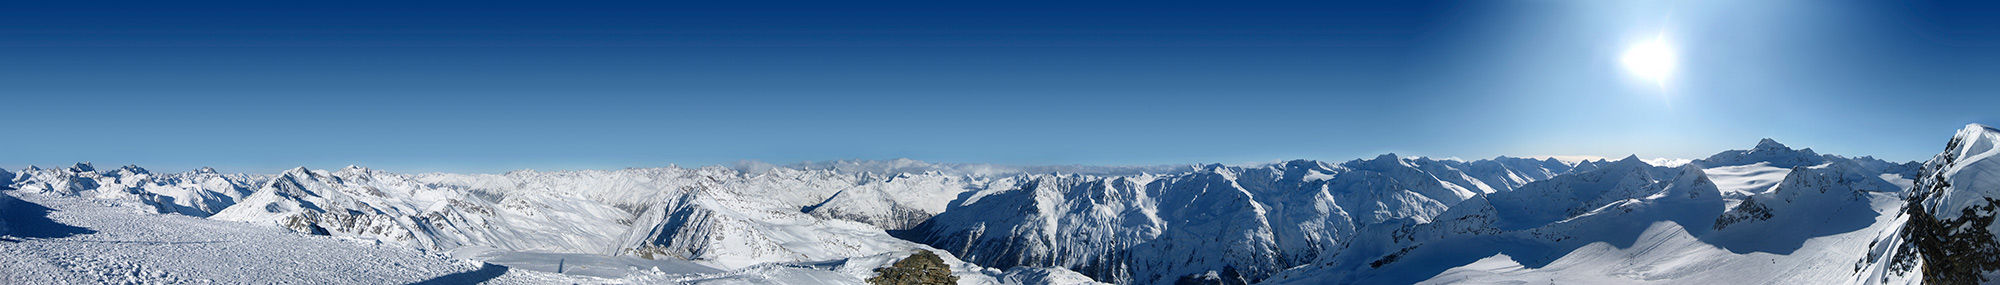 Фотообои панорама горных вершин над облаками (nature-00340)